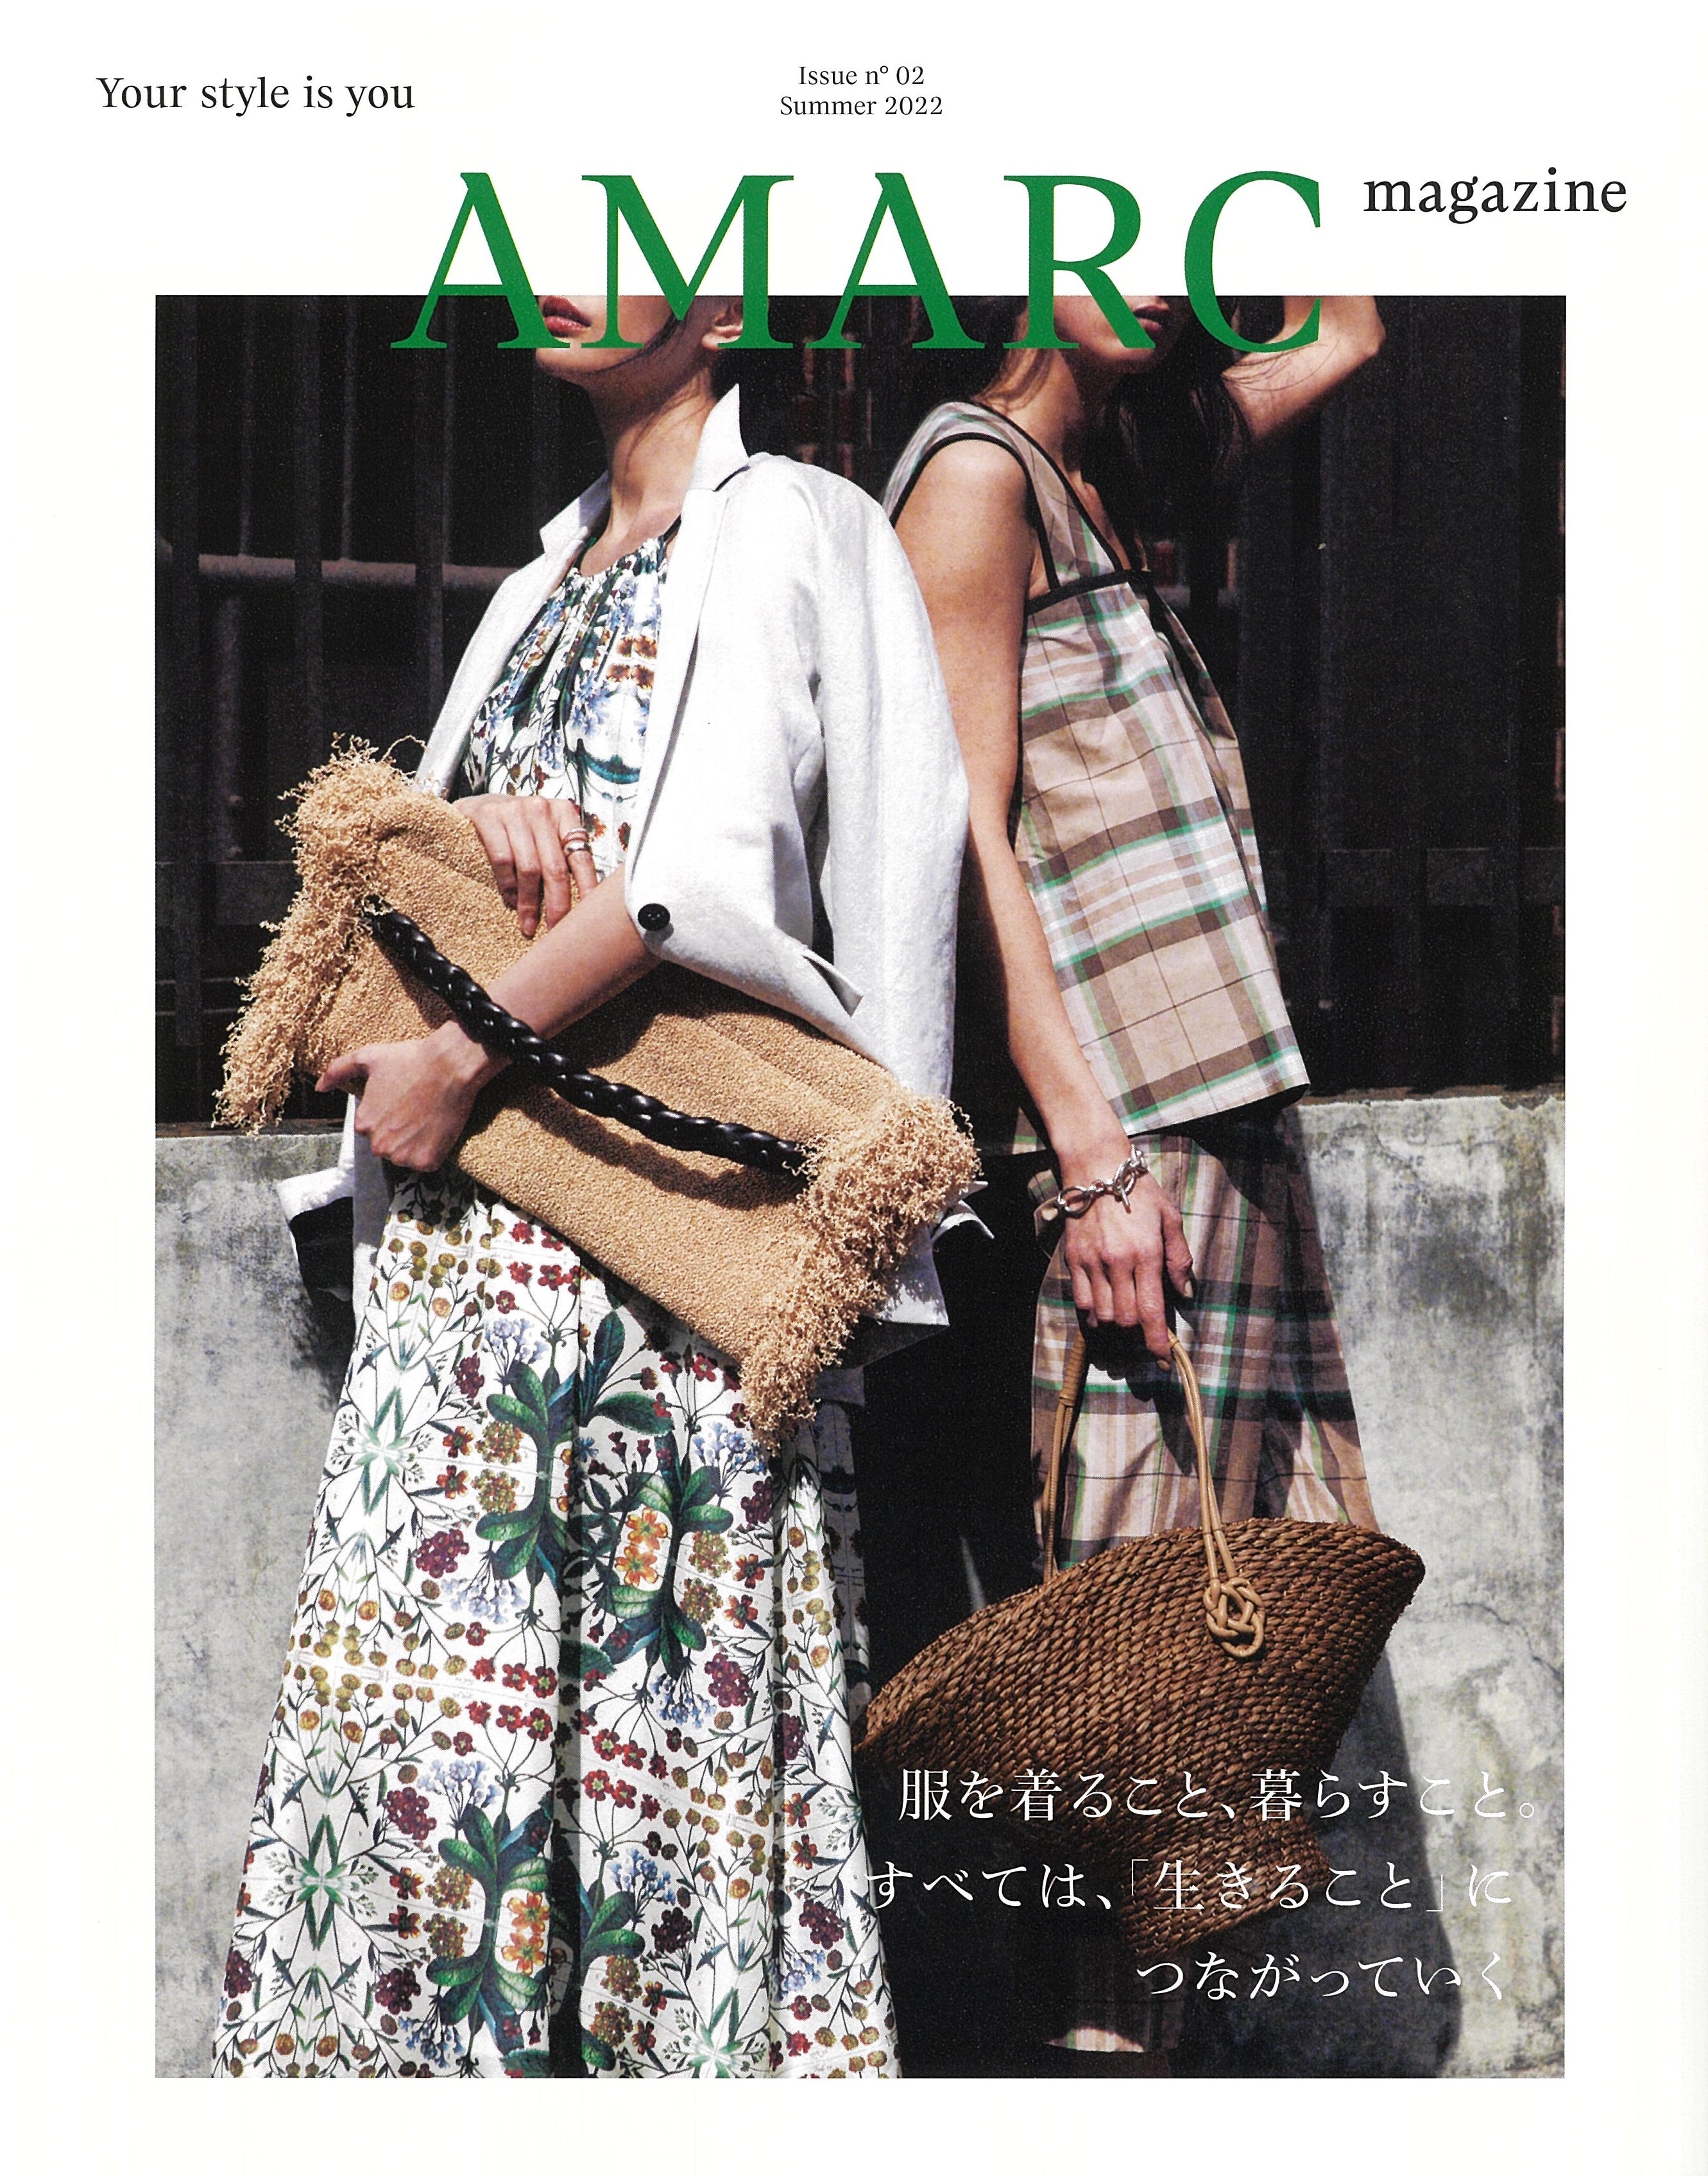 AMARC magazine issue 02 x PRMAL